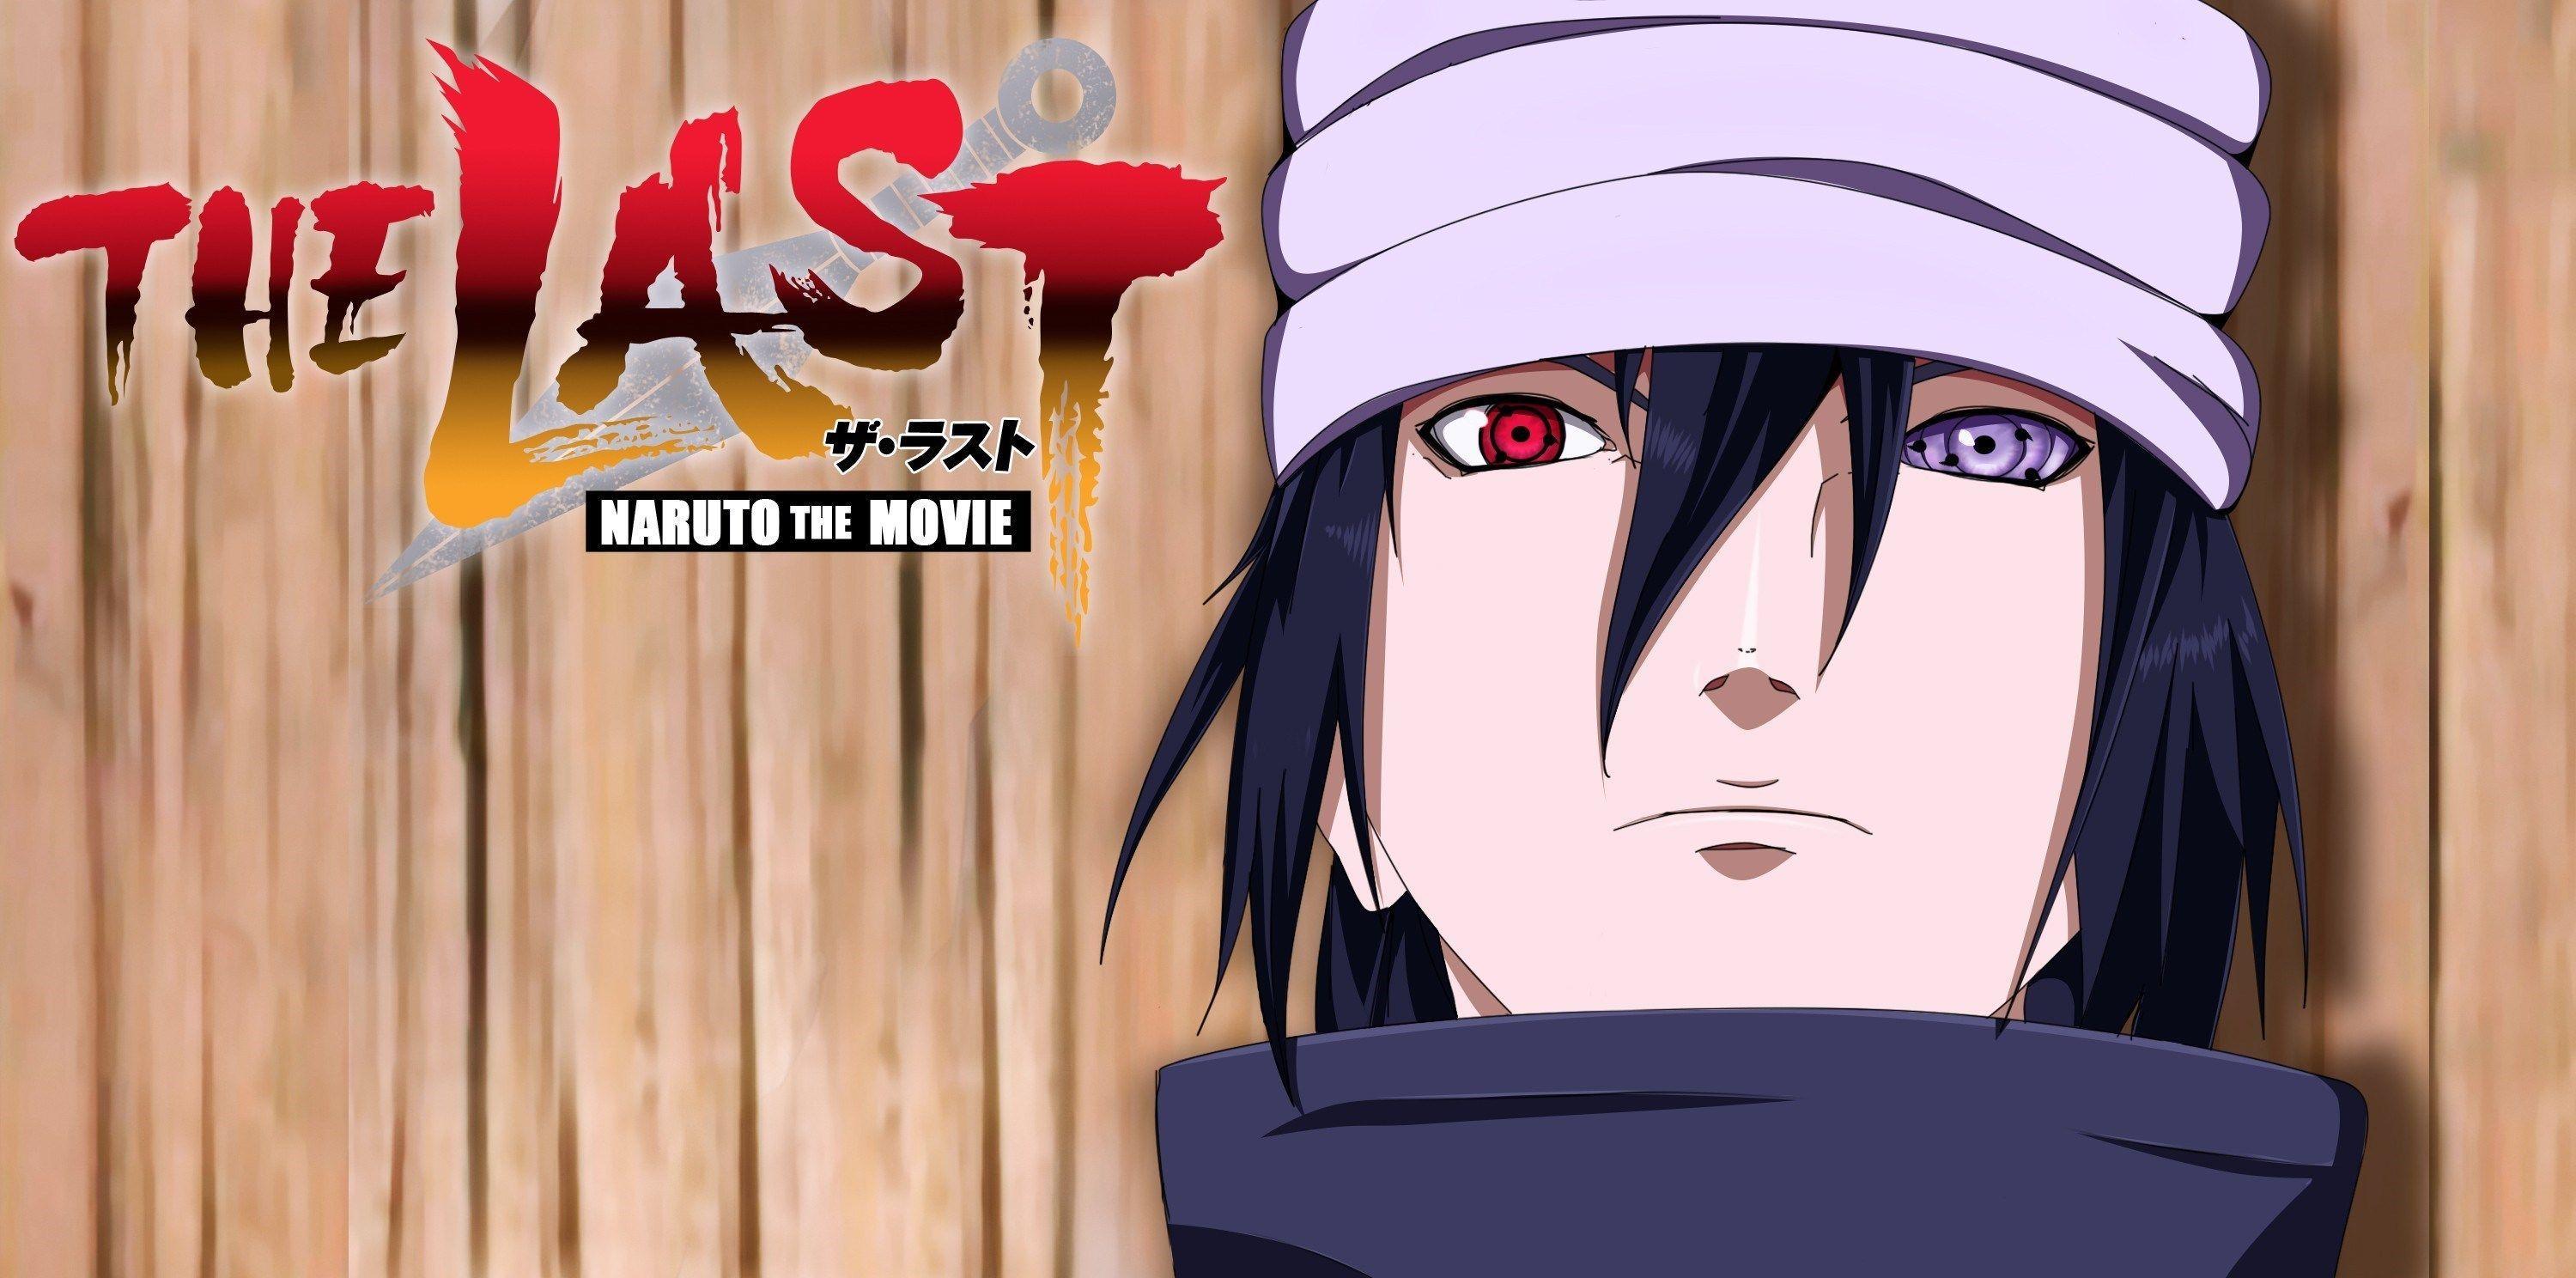 Wallpaper Naruto, Last trailer, Uchiha sasuke HD, Picture, Image